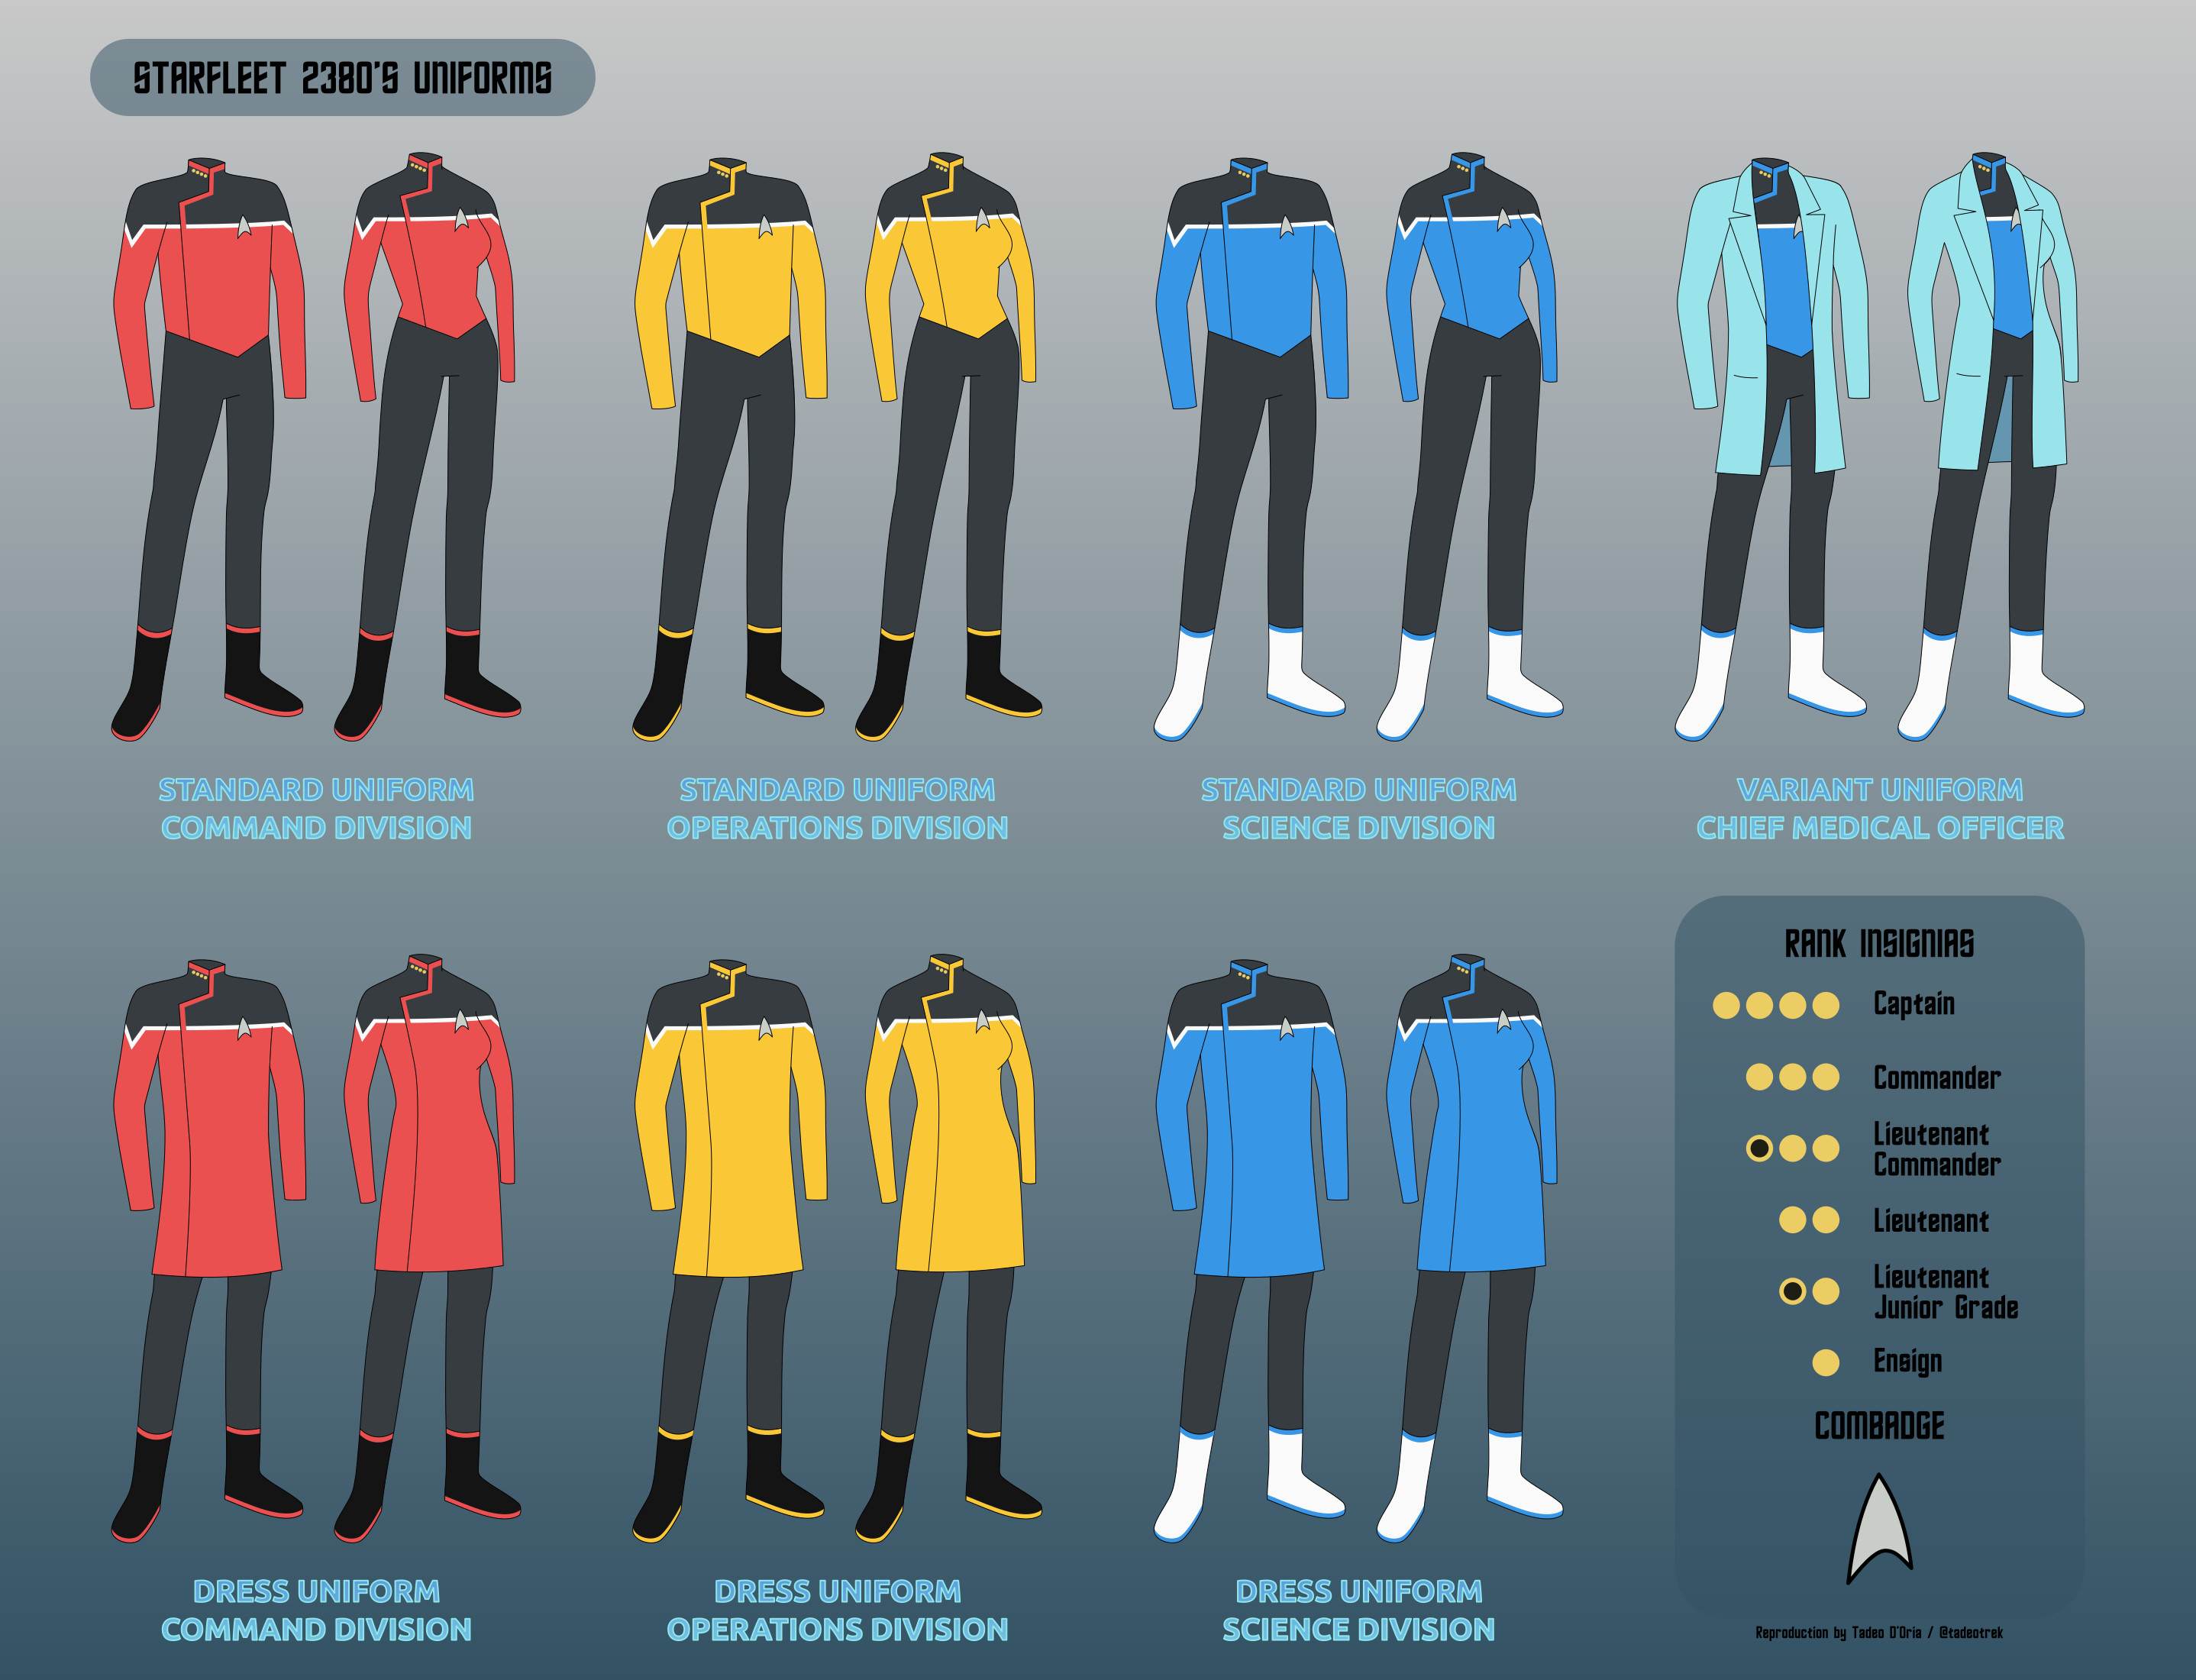 why did star trek change uniform colors